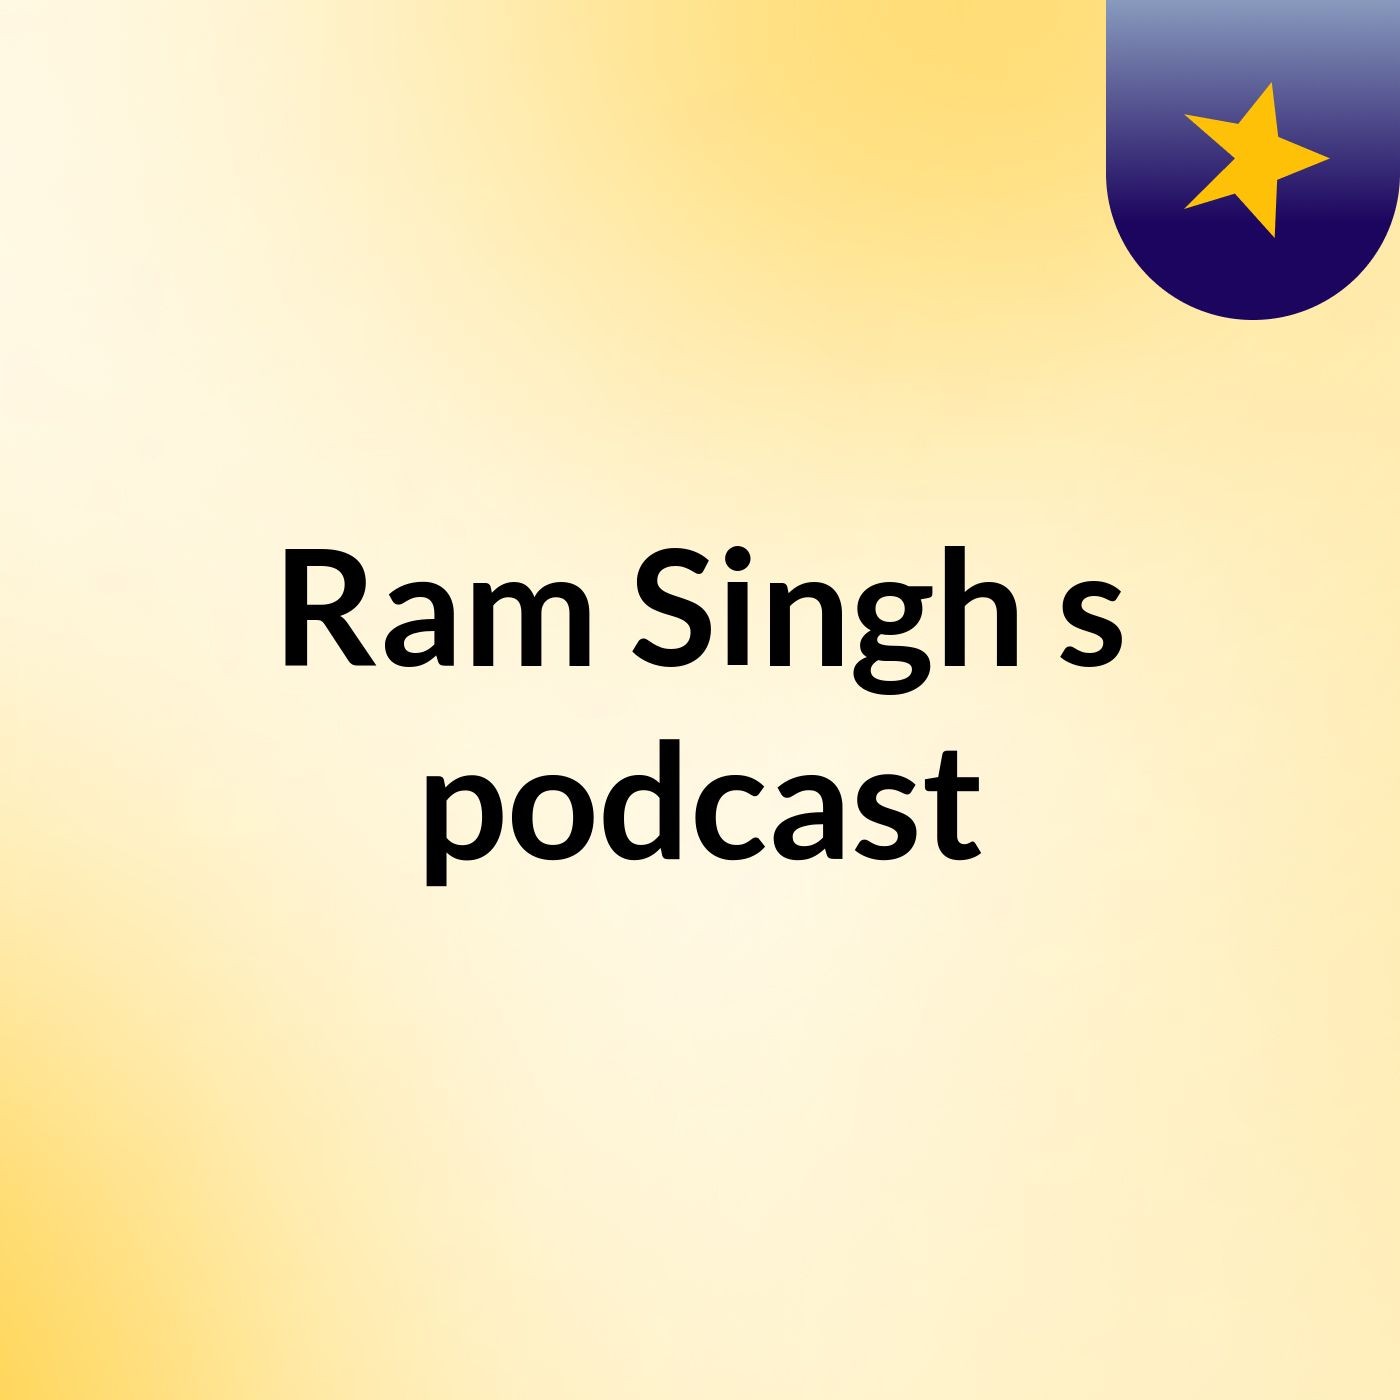 Ram Singh's podcast